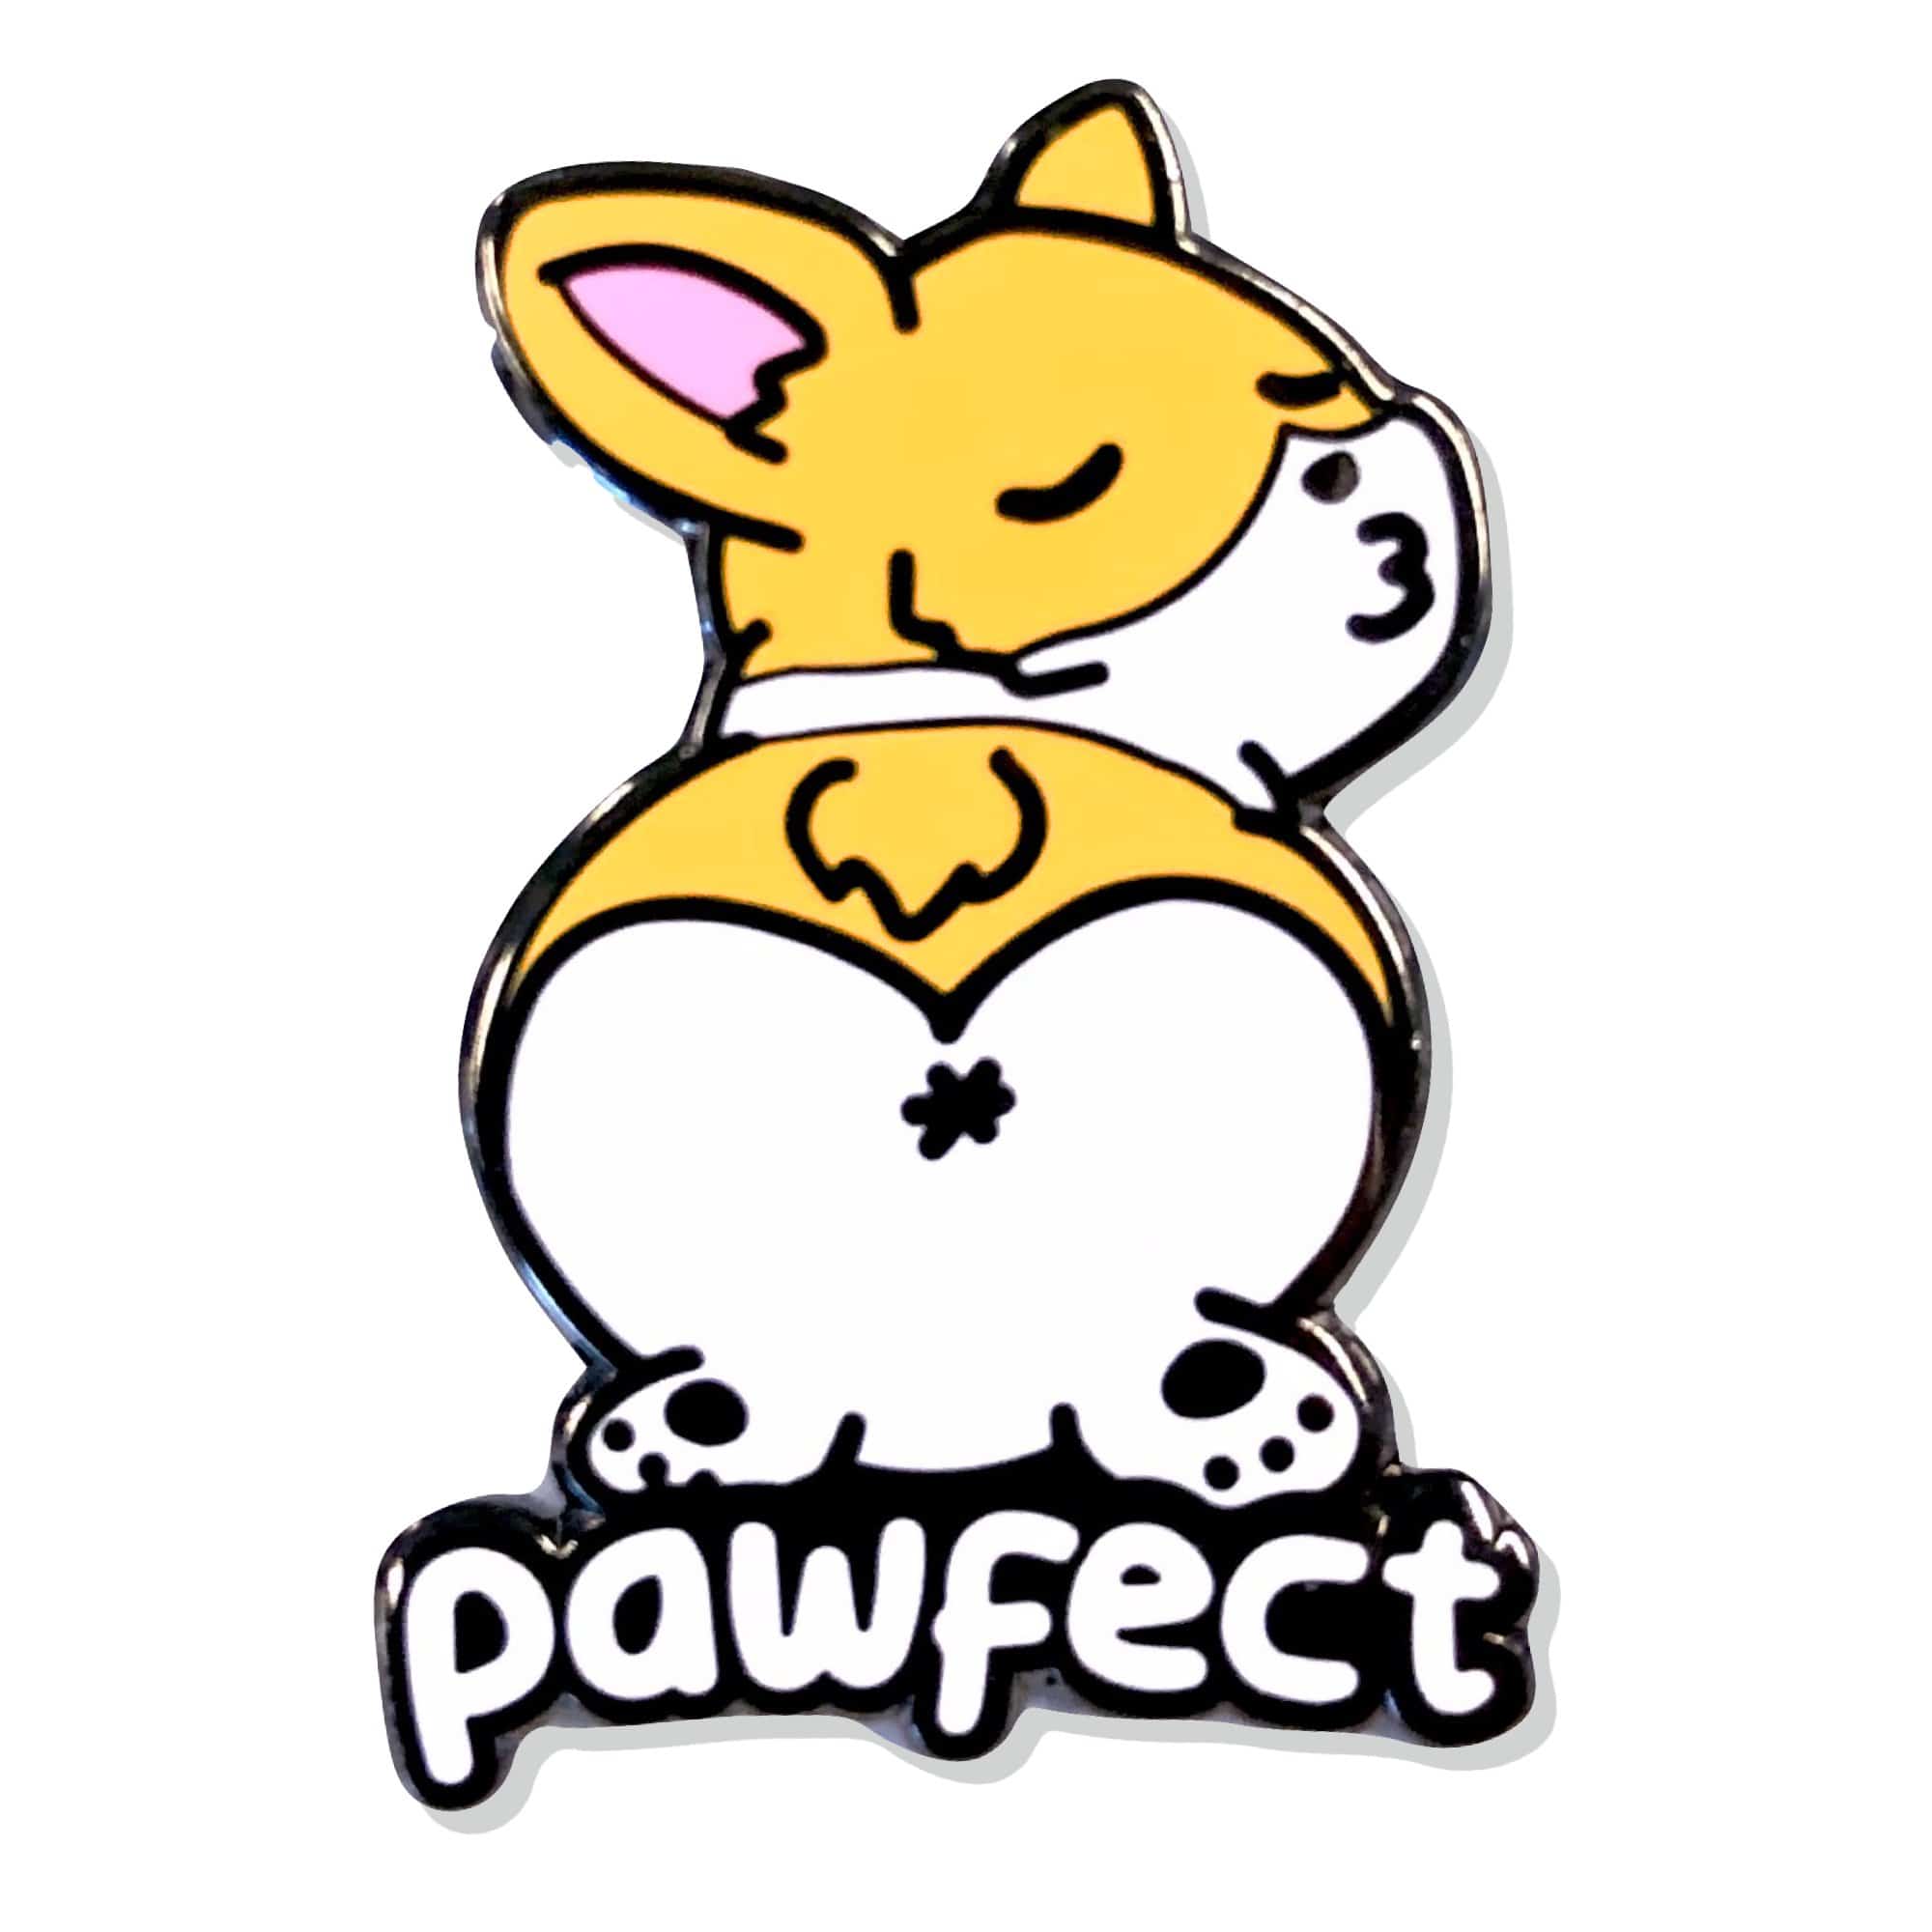 punimpressed Pawfect Corgi Butt pin